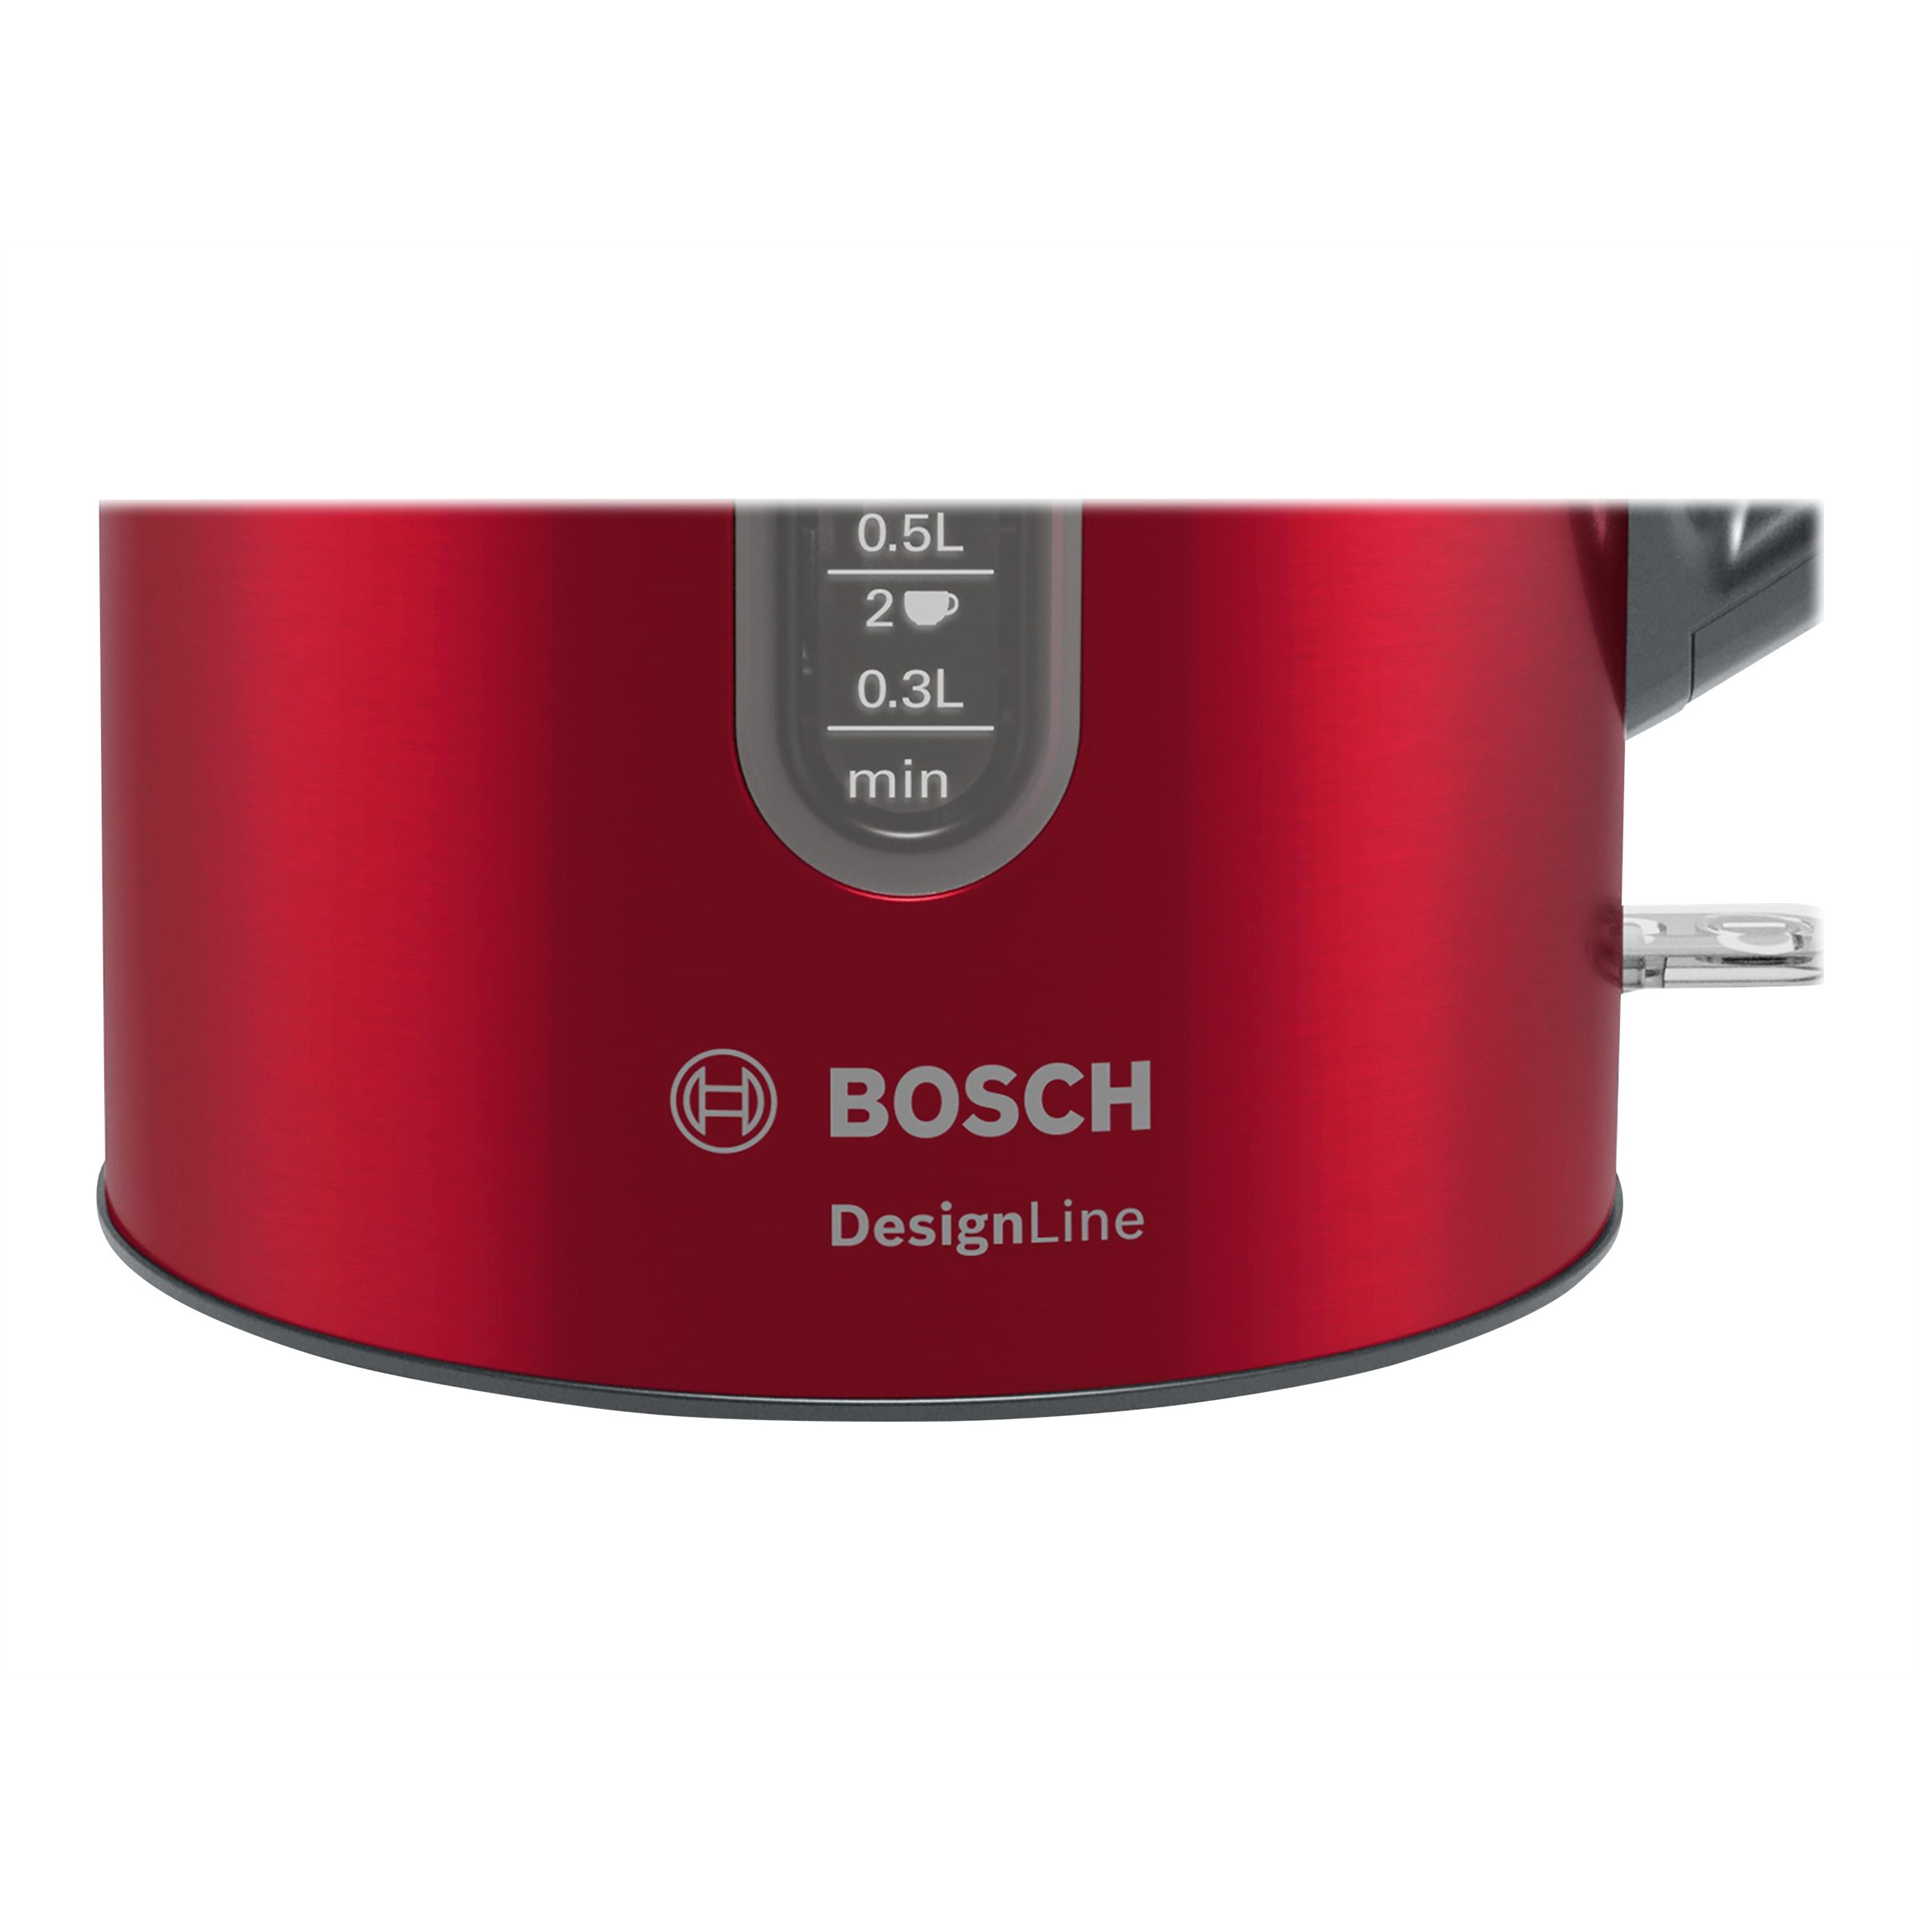 Bosch Kettle DesignLine TWK4P434 Electric 2400 W 1.7 L Stainless steel 360° rotational base Red/Black